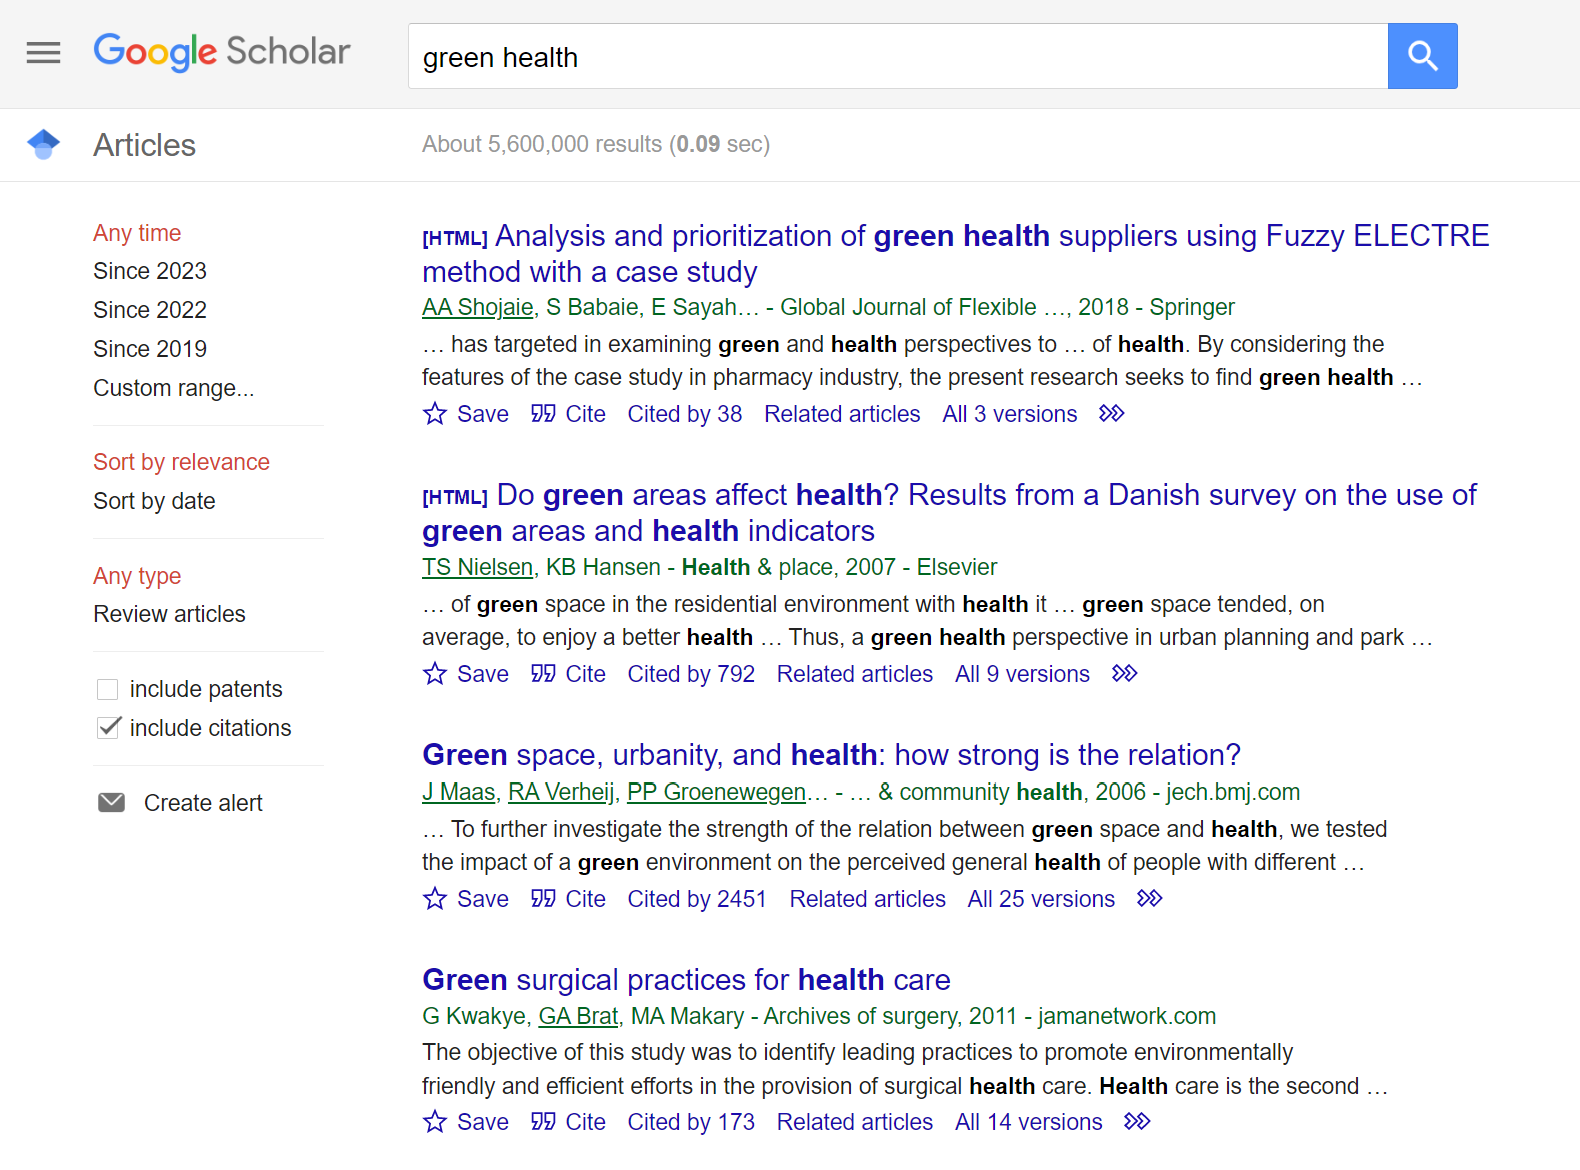 Google Scholar search returns